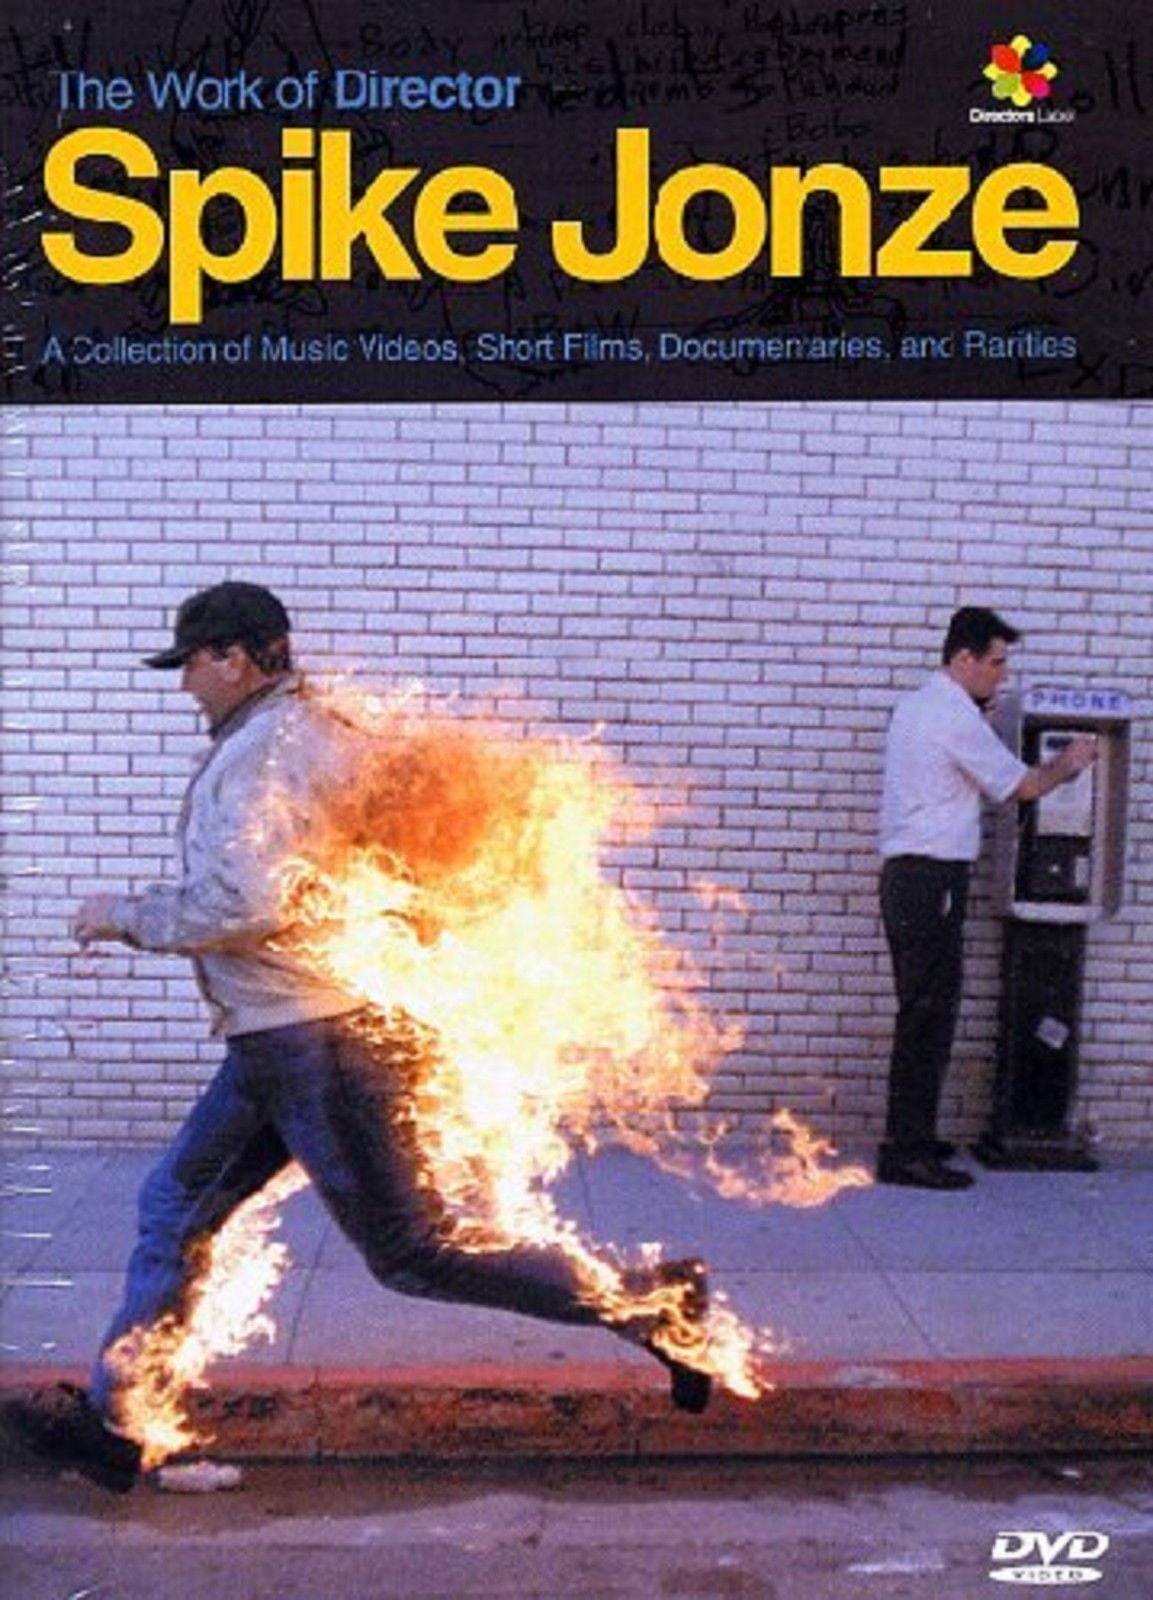 The Work of Director Spike Jonze (2003)